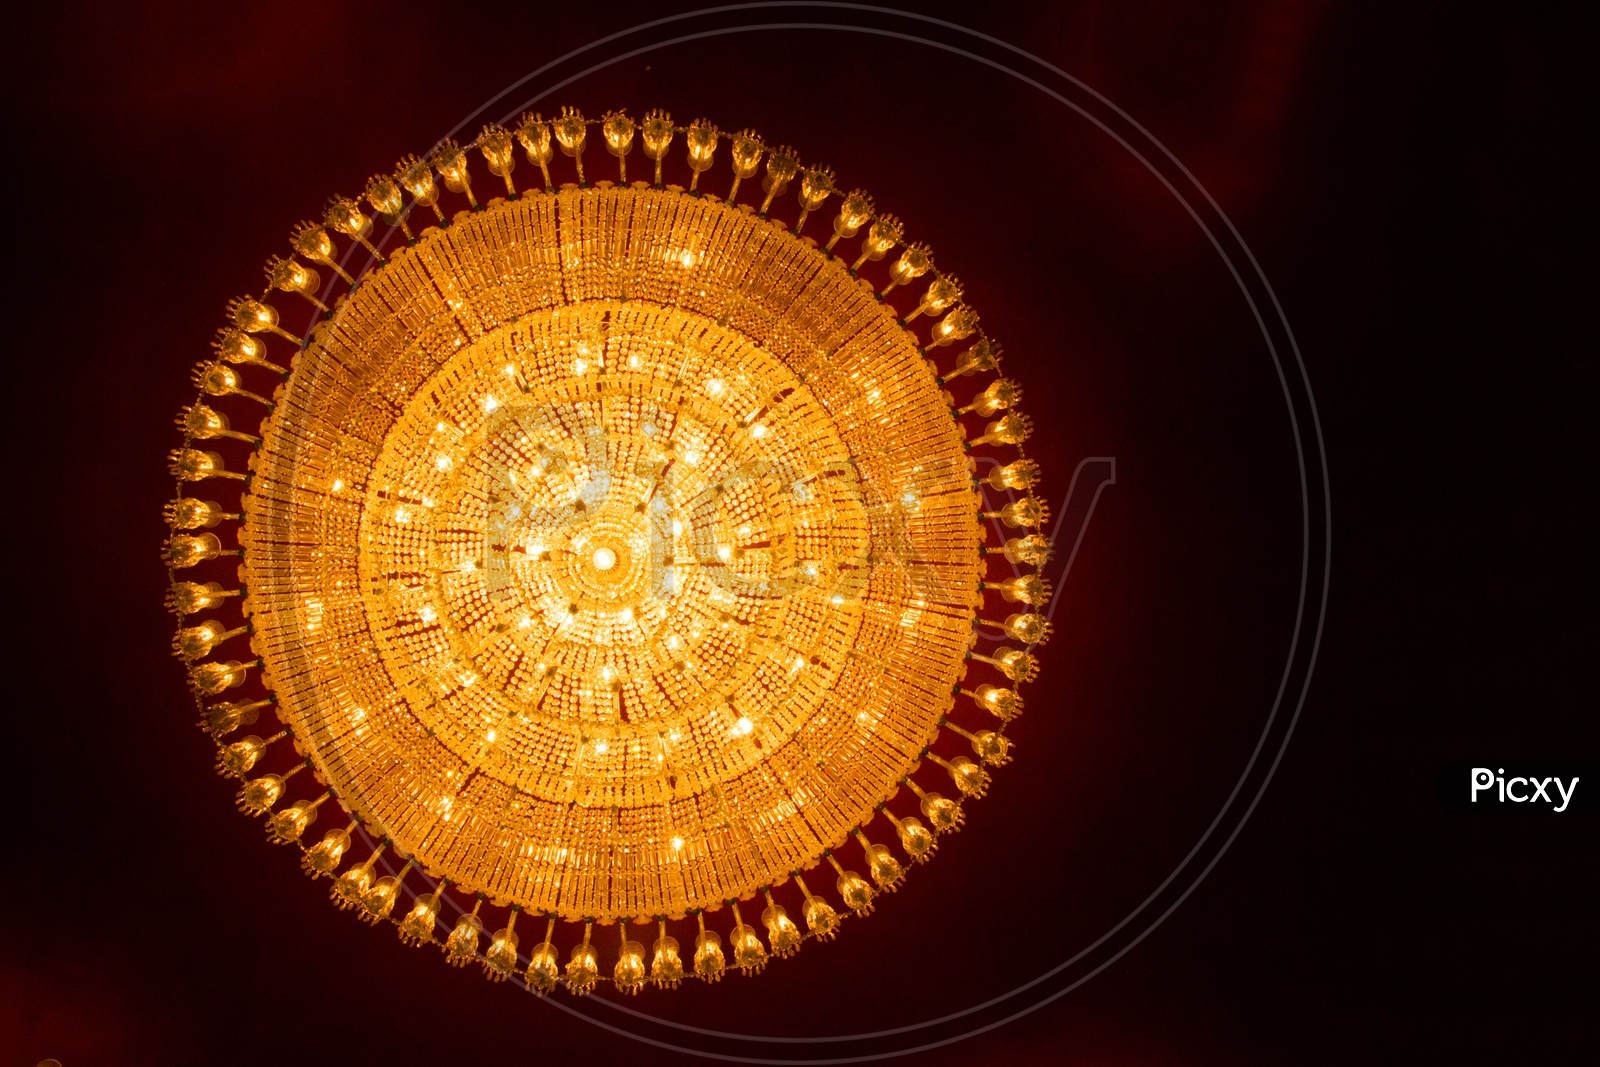 Round Ceiling Chandelier Light At Durga Puja Pandal Worship